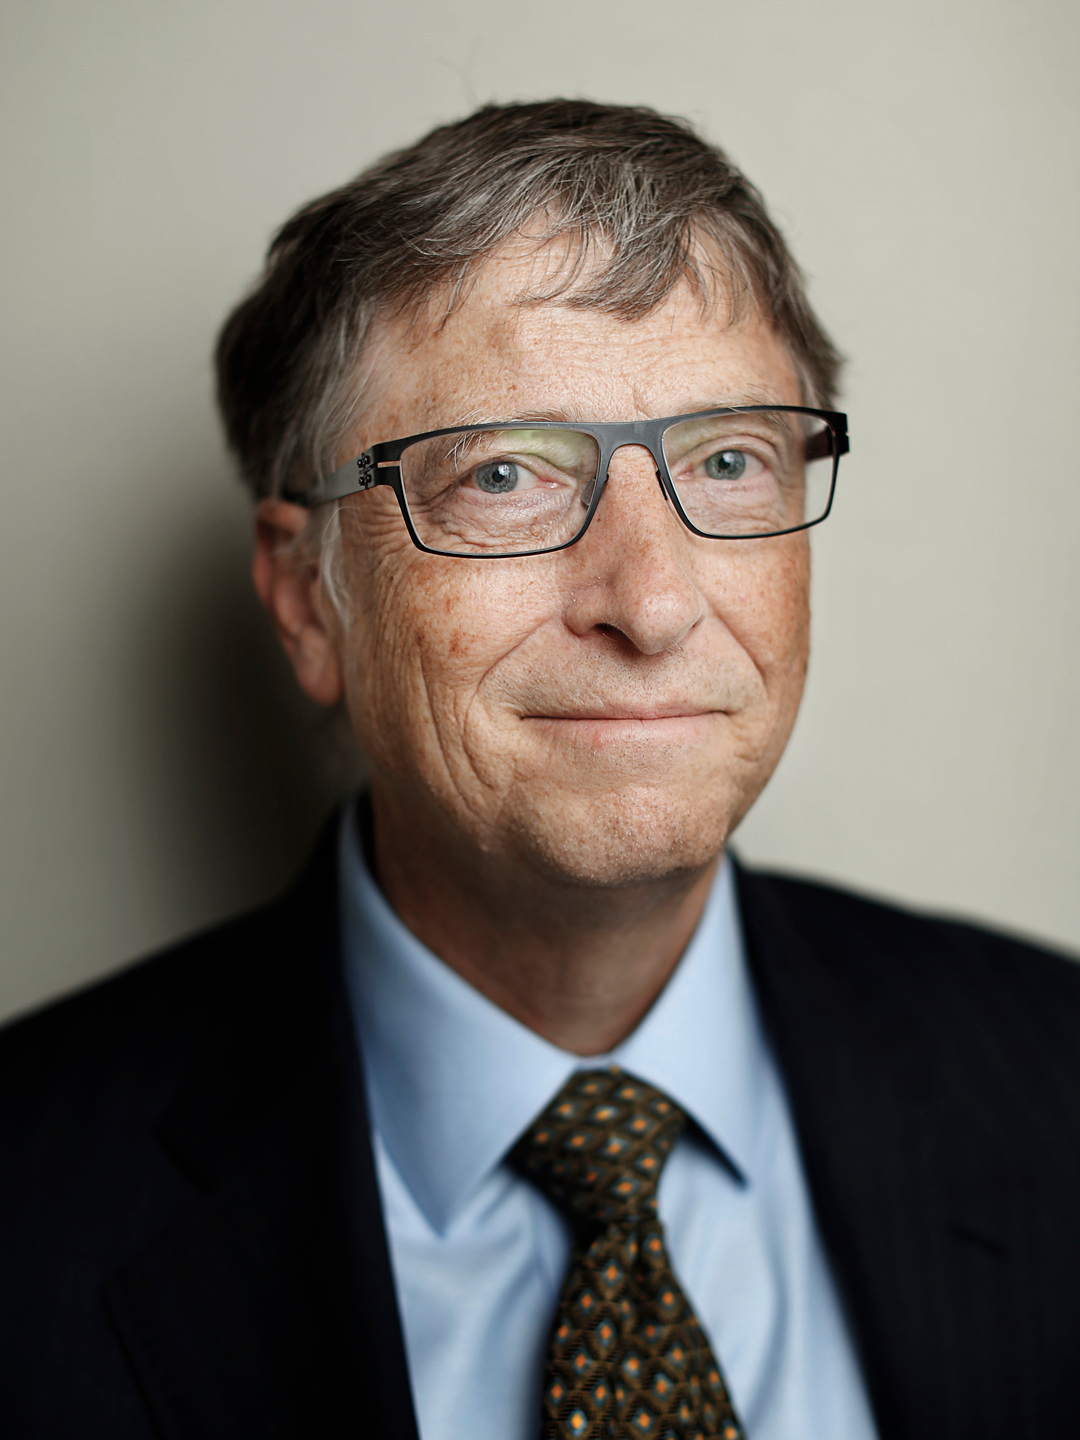 Bill Gates appearance